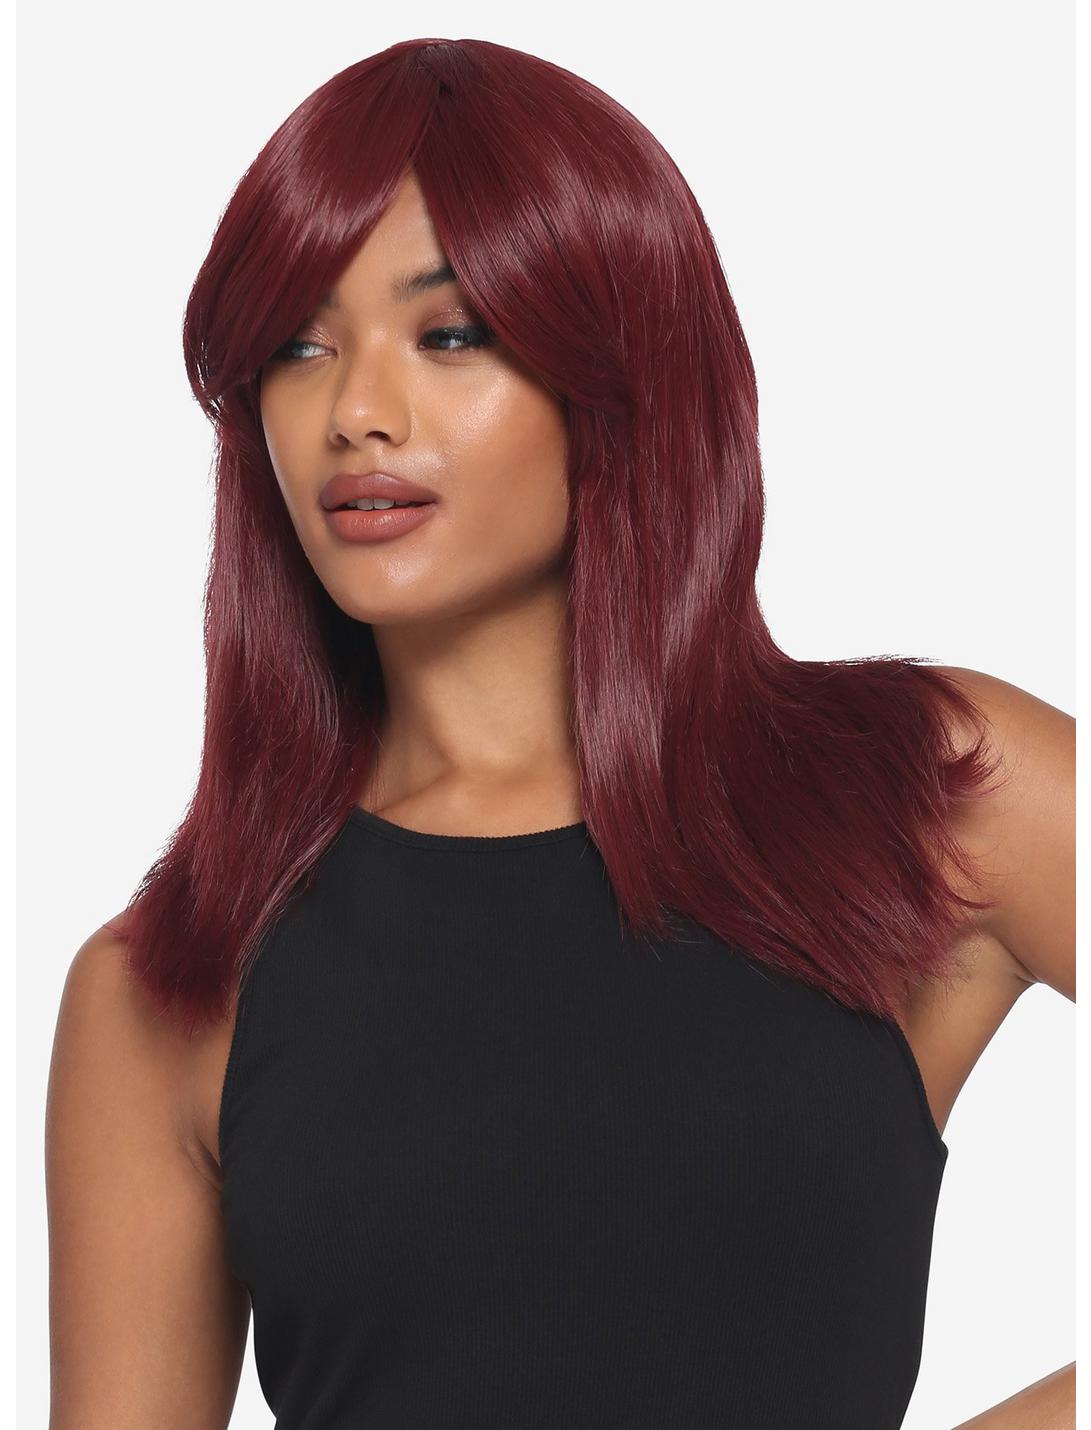 Epic Cosplay Theia Burgundy Red Medium Length Wig, , hi-res